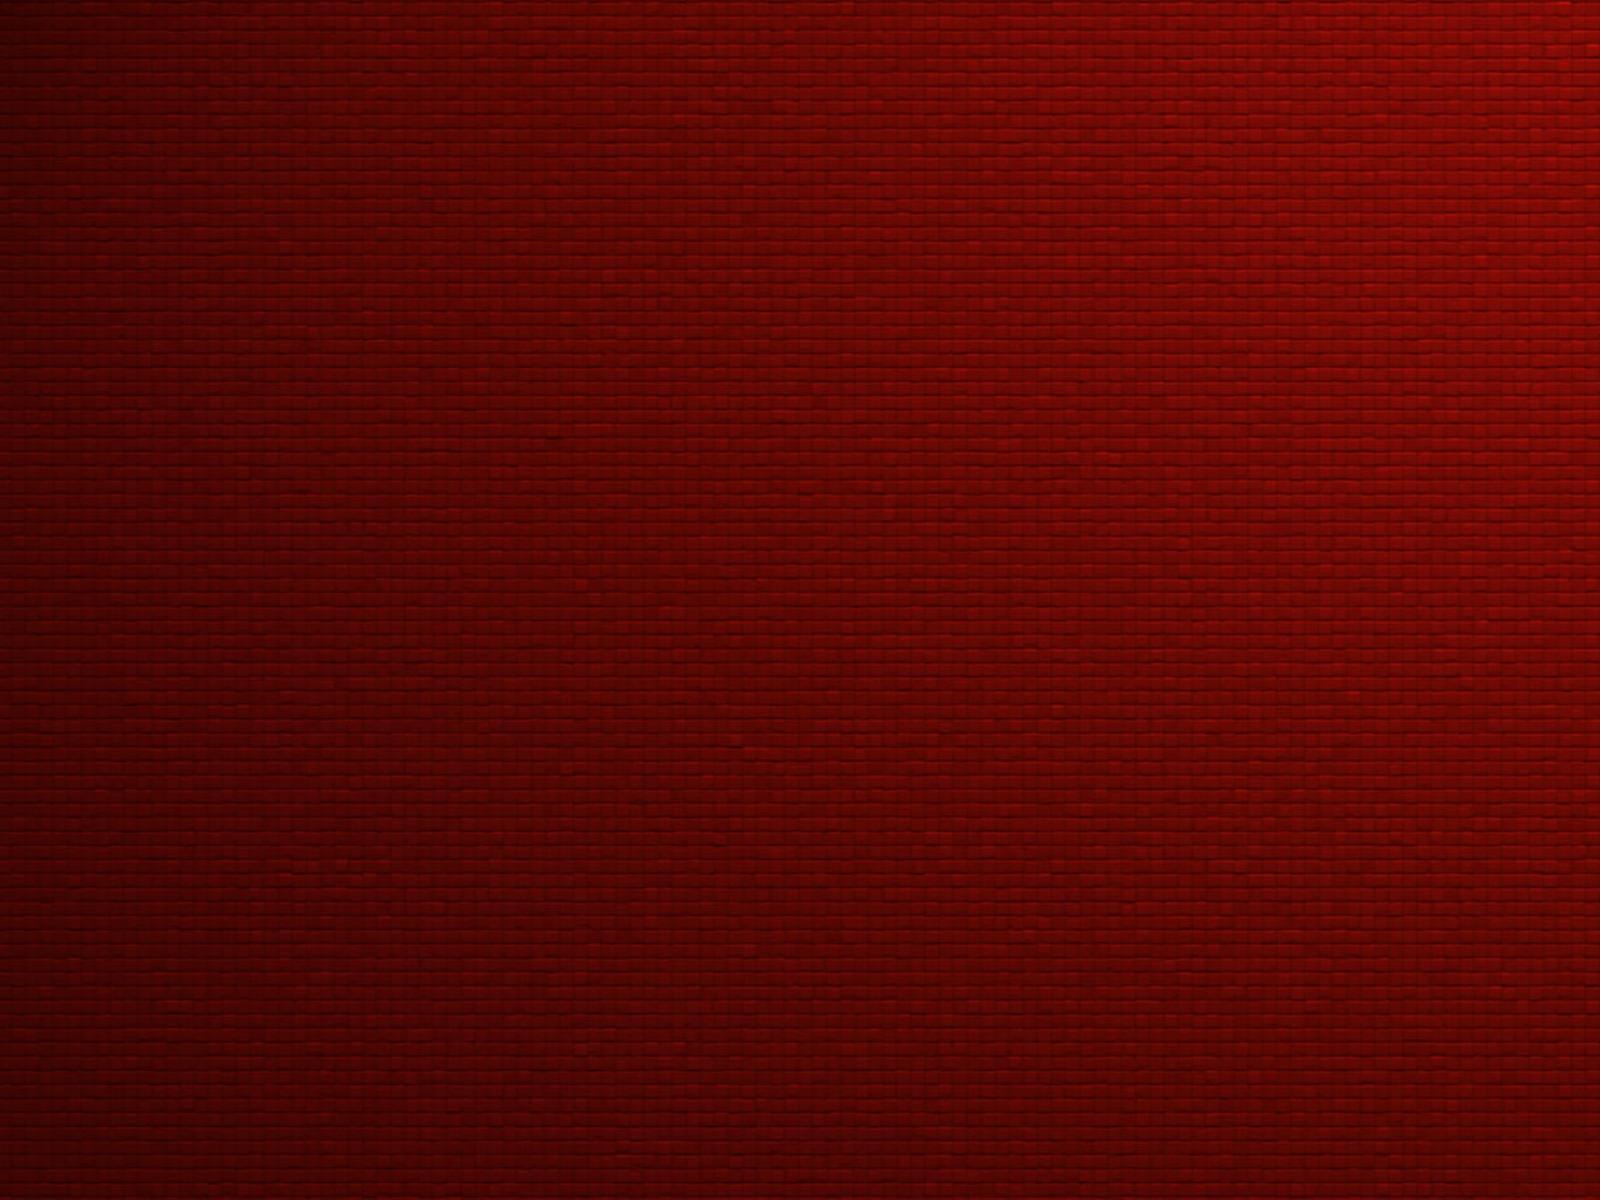 1600x1200 Red Desktop Wallpaper Abstract Red Wallpaper